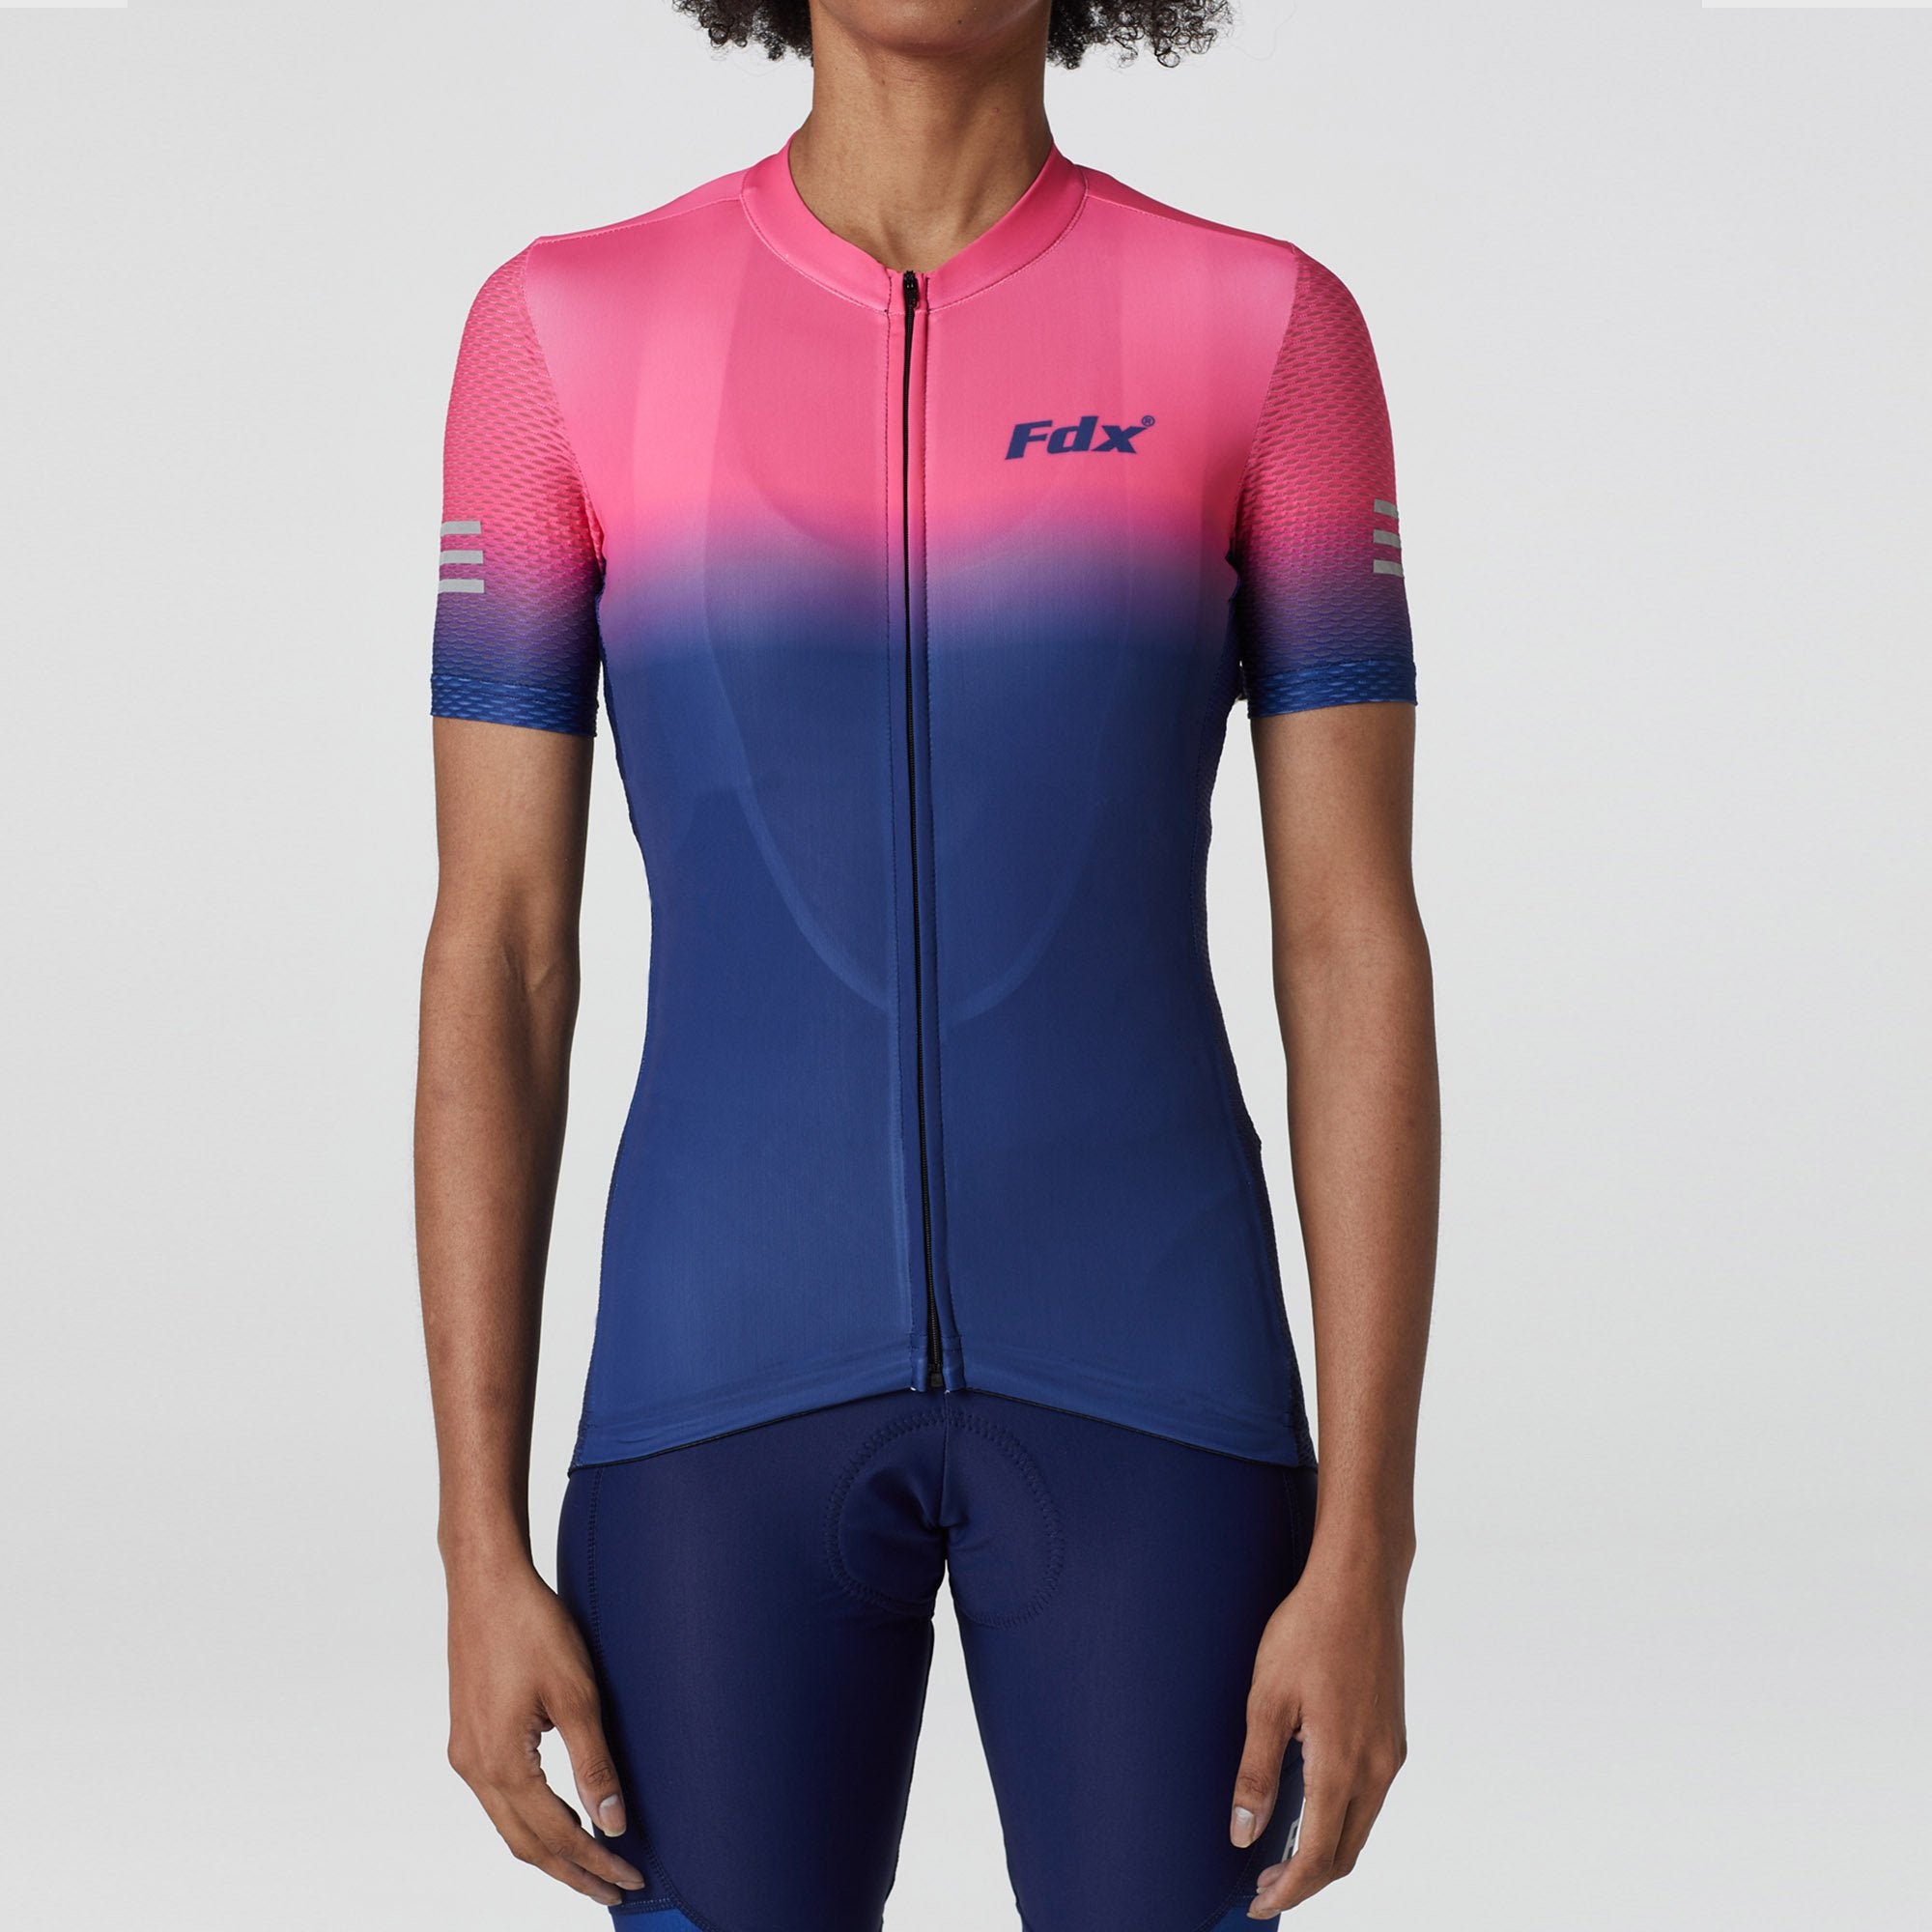 Fdx Duo Pink / Blue Women's Short Sleeve Summer Cycling Jersey